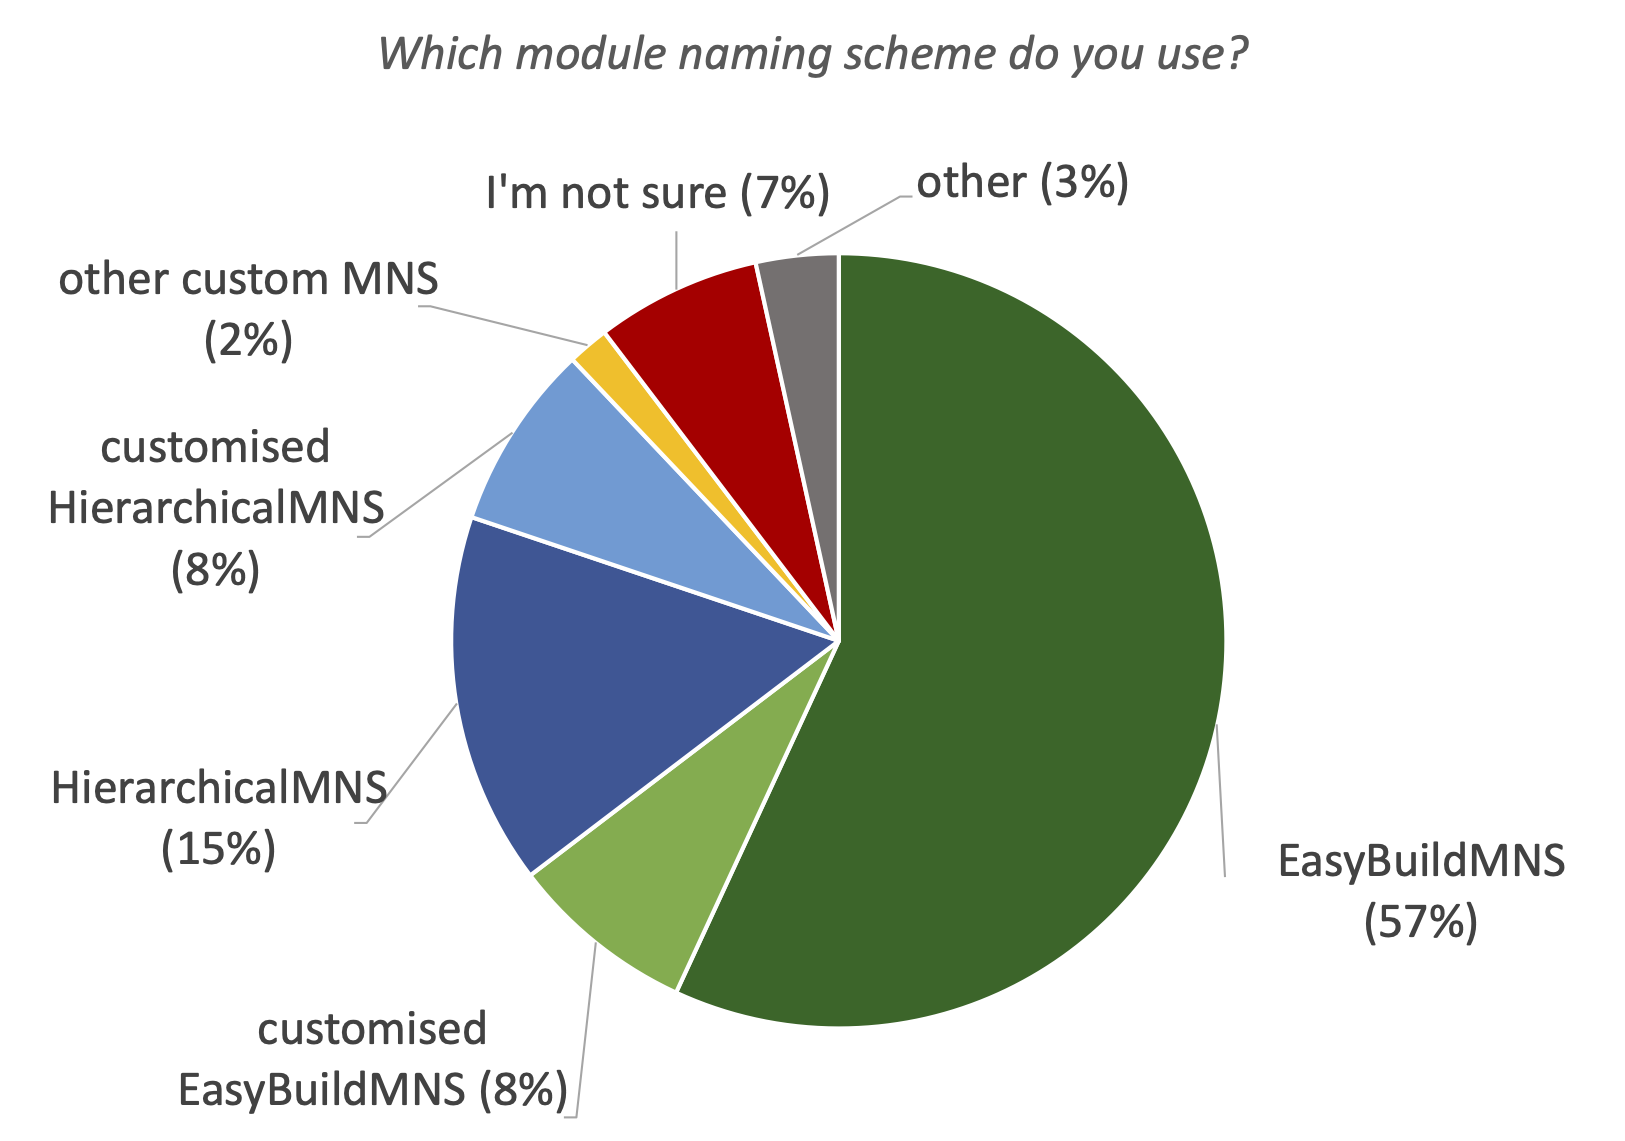 44. Which module naming scheme do you use?